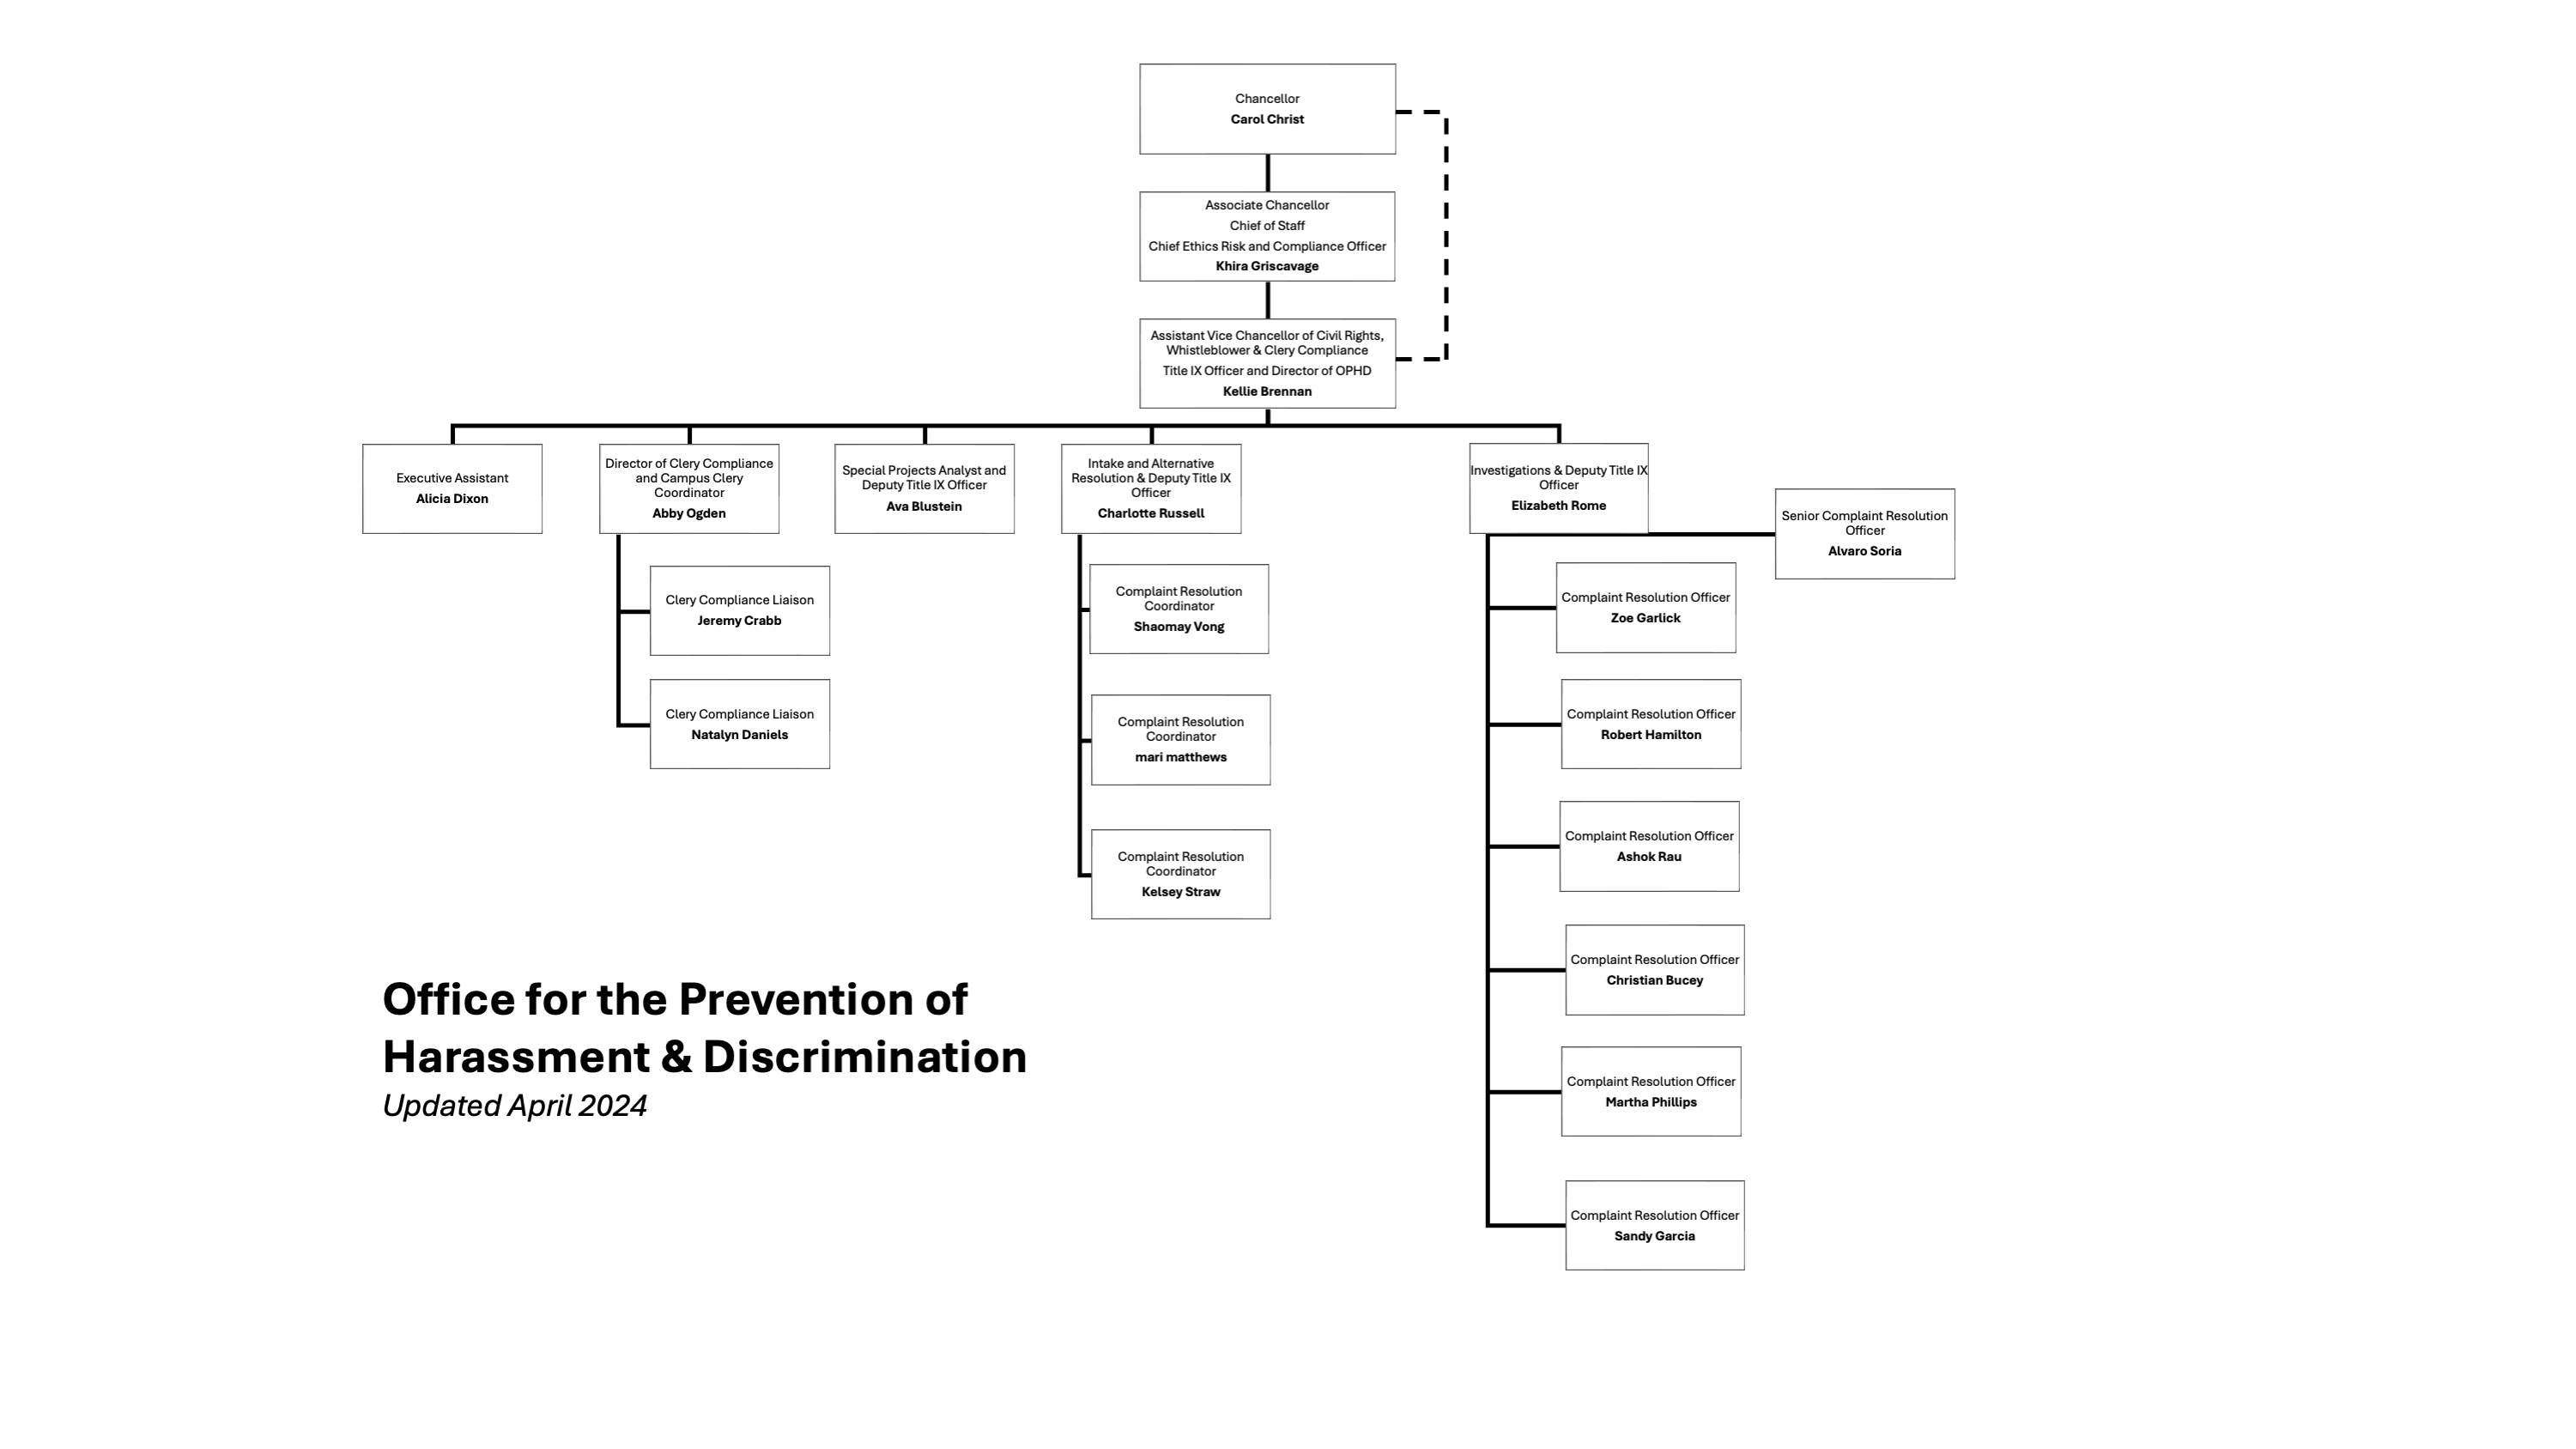 A visual representation of the Civil Rights units organizational chart.